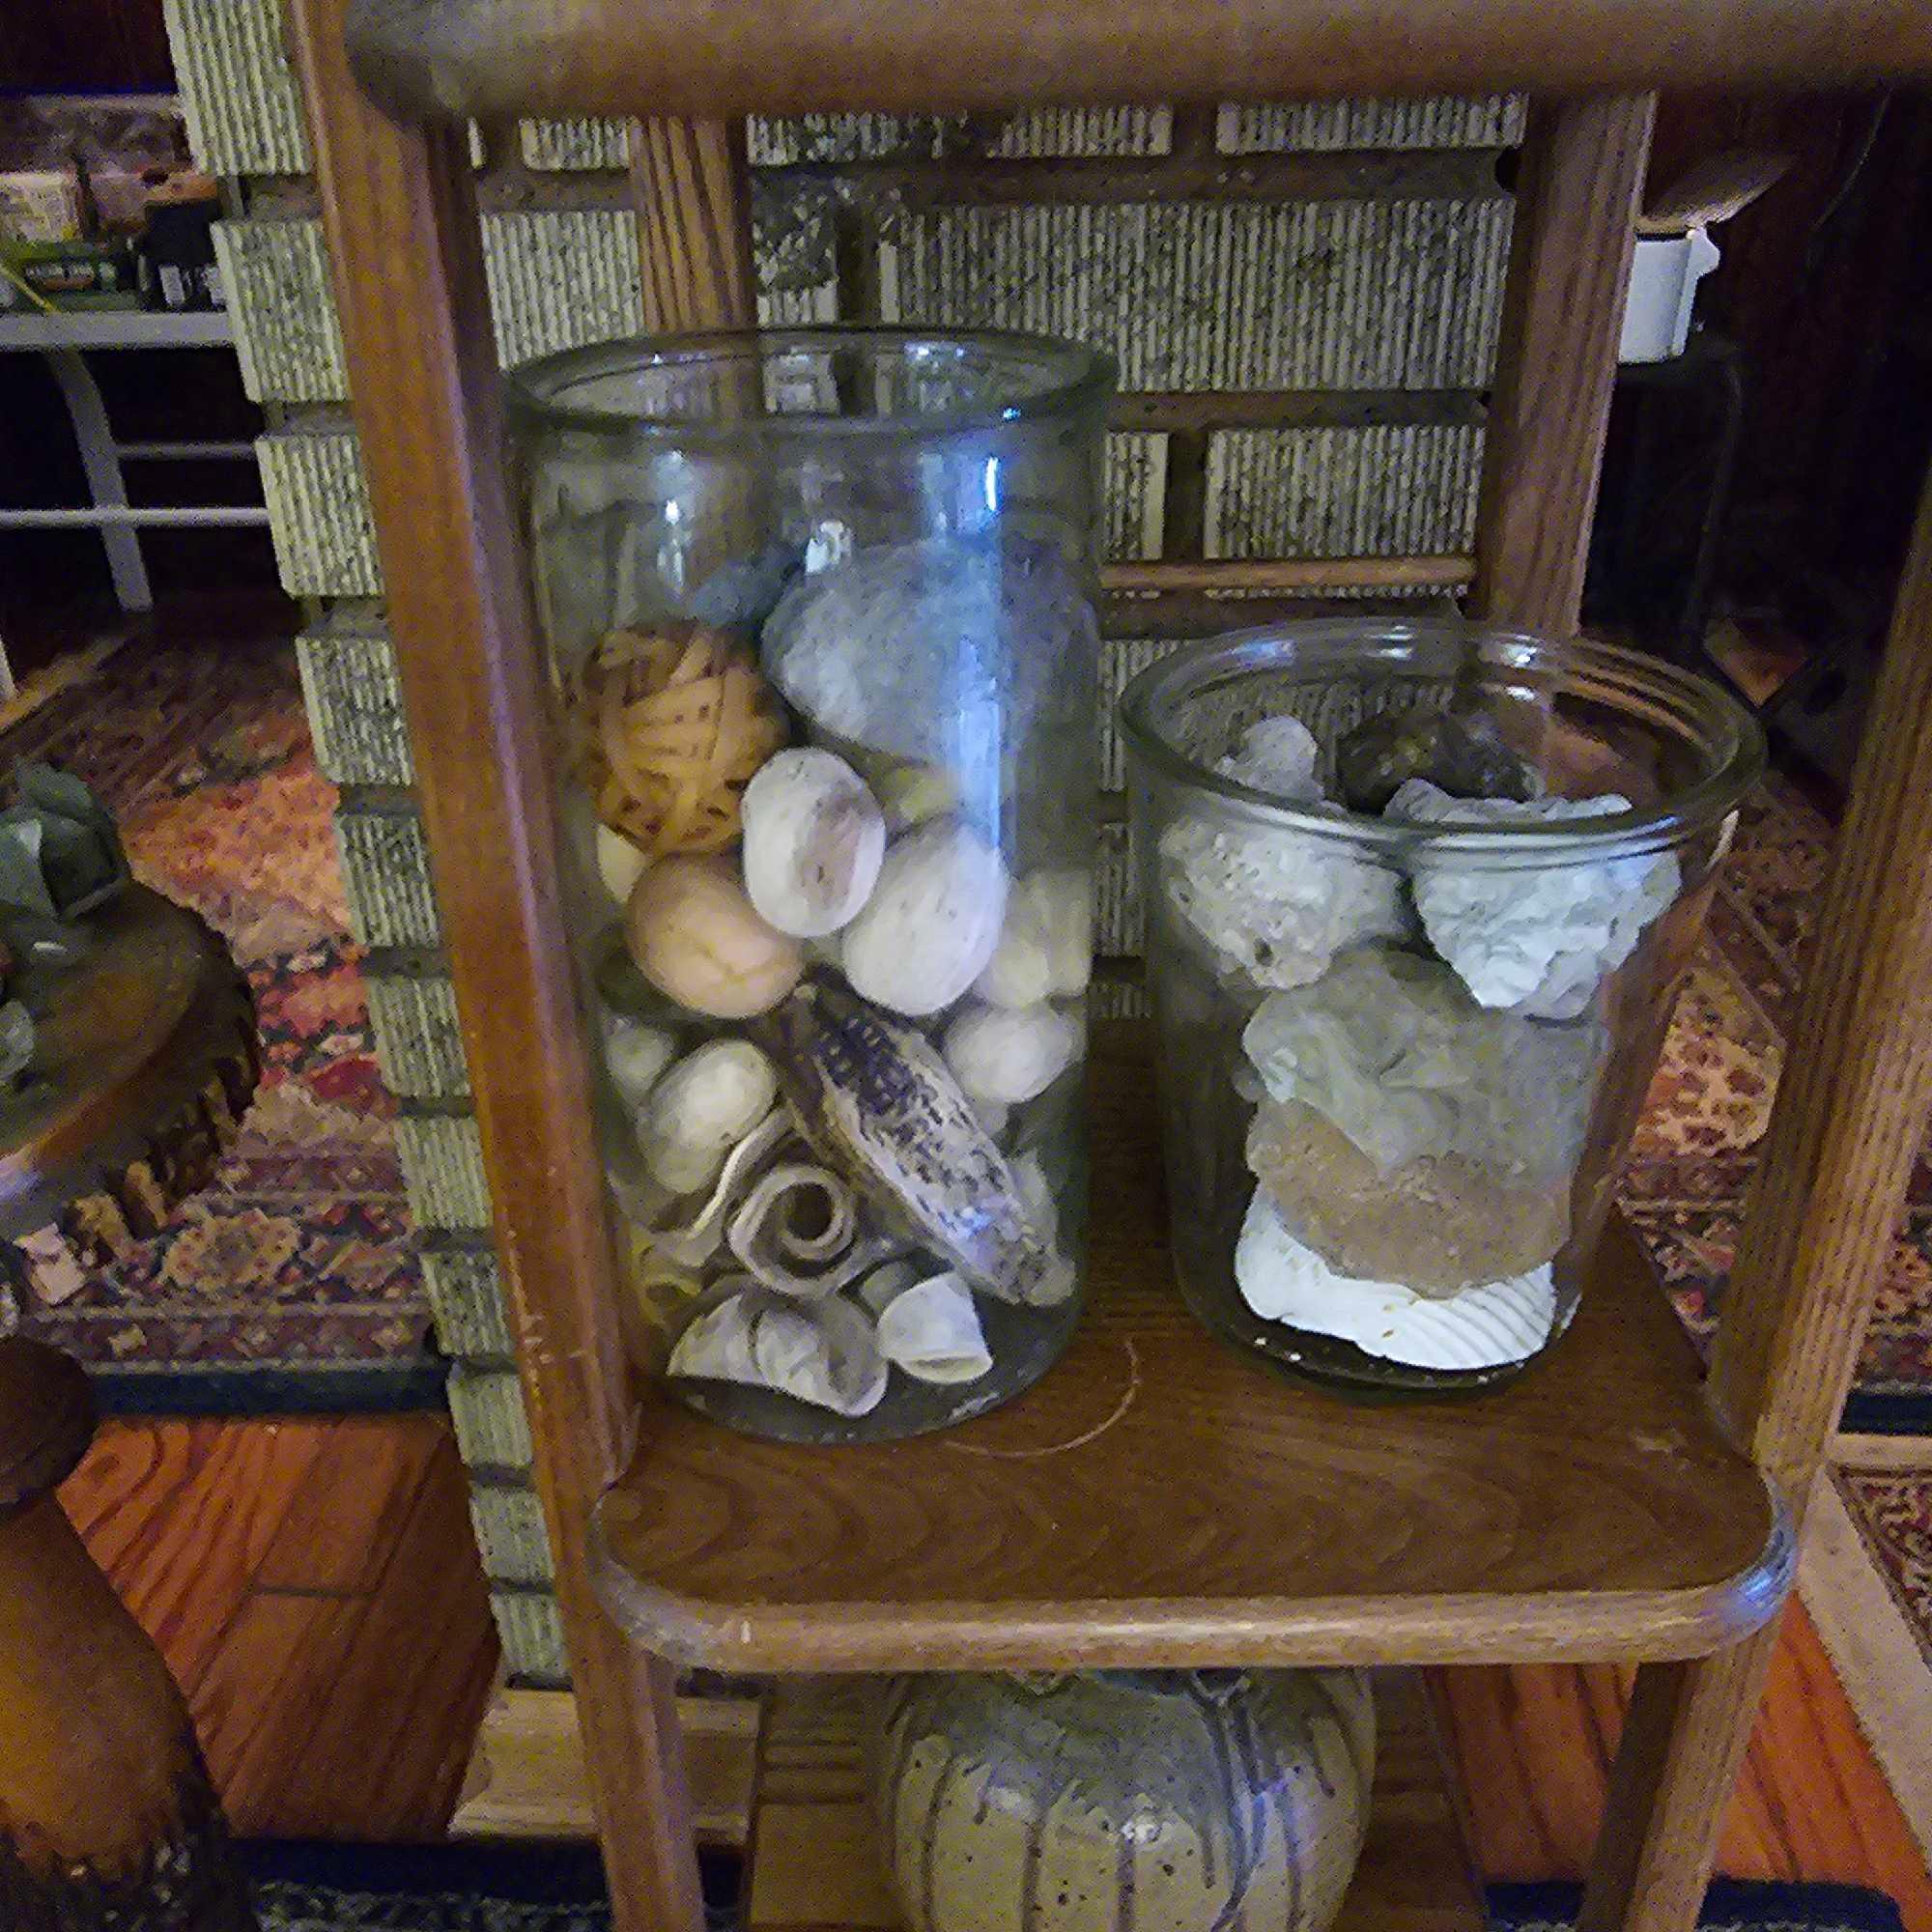 Contents of Display Shelves - Seashells, Coral Pieces, Glassware & Stoneware